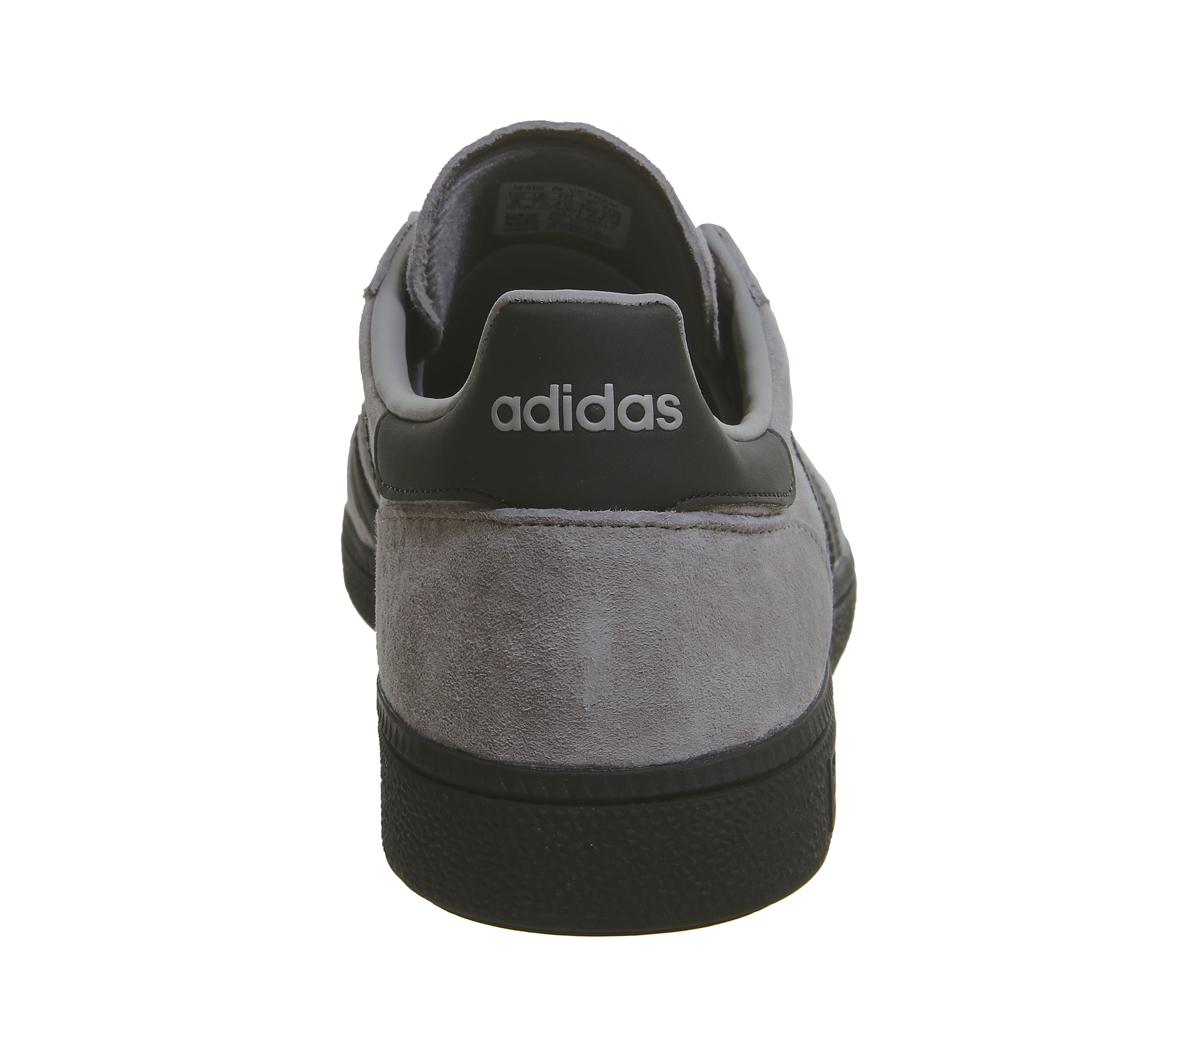 adidas handball spezial solid grey